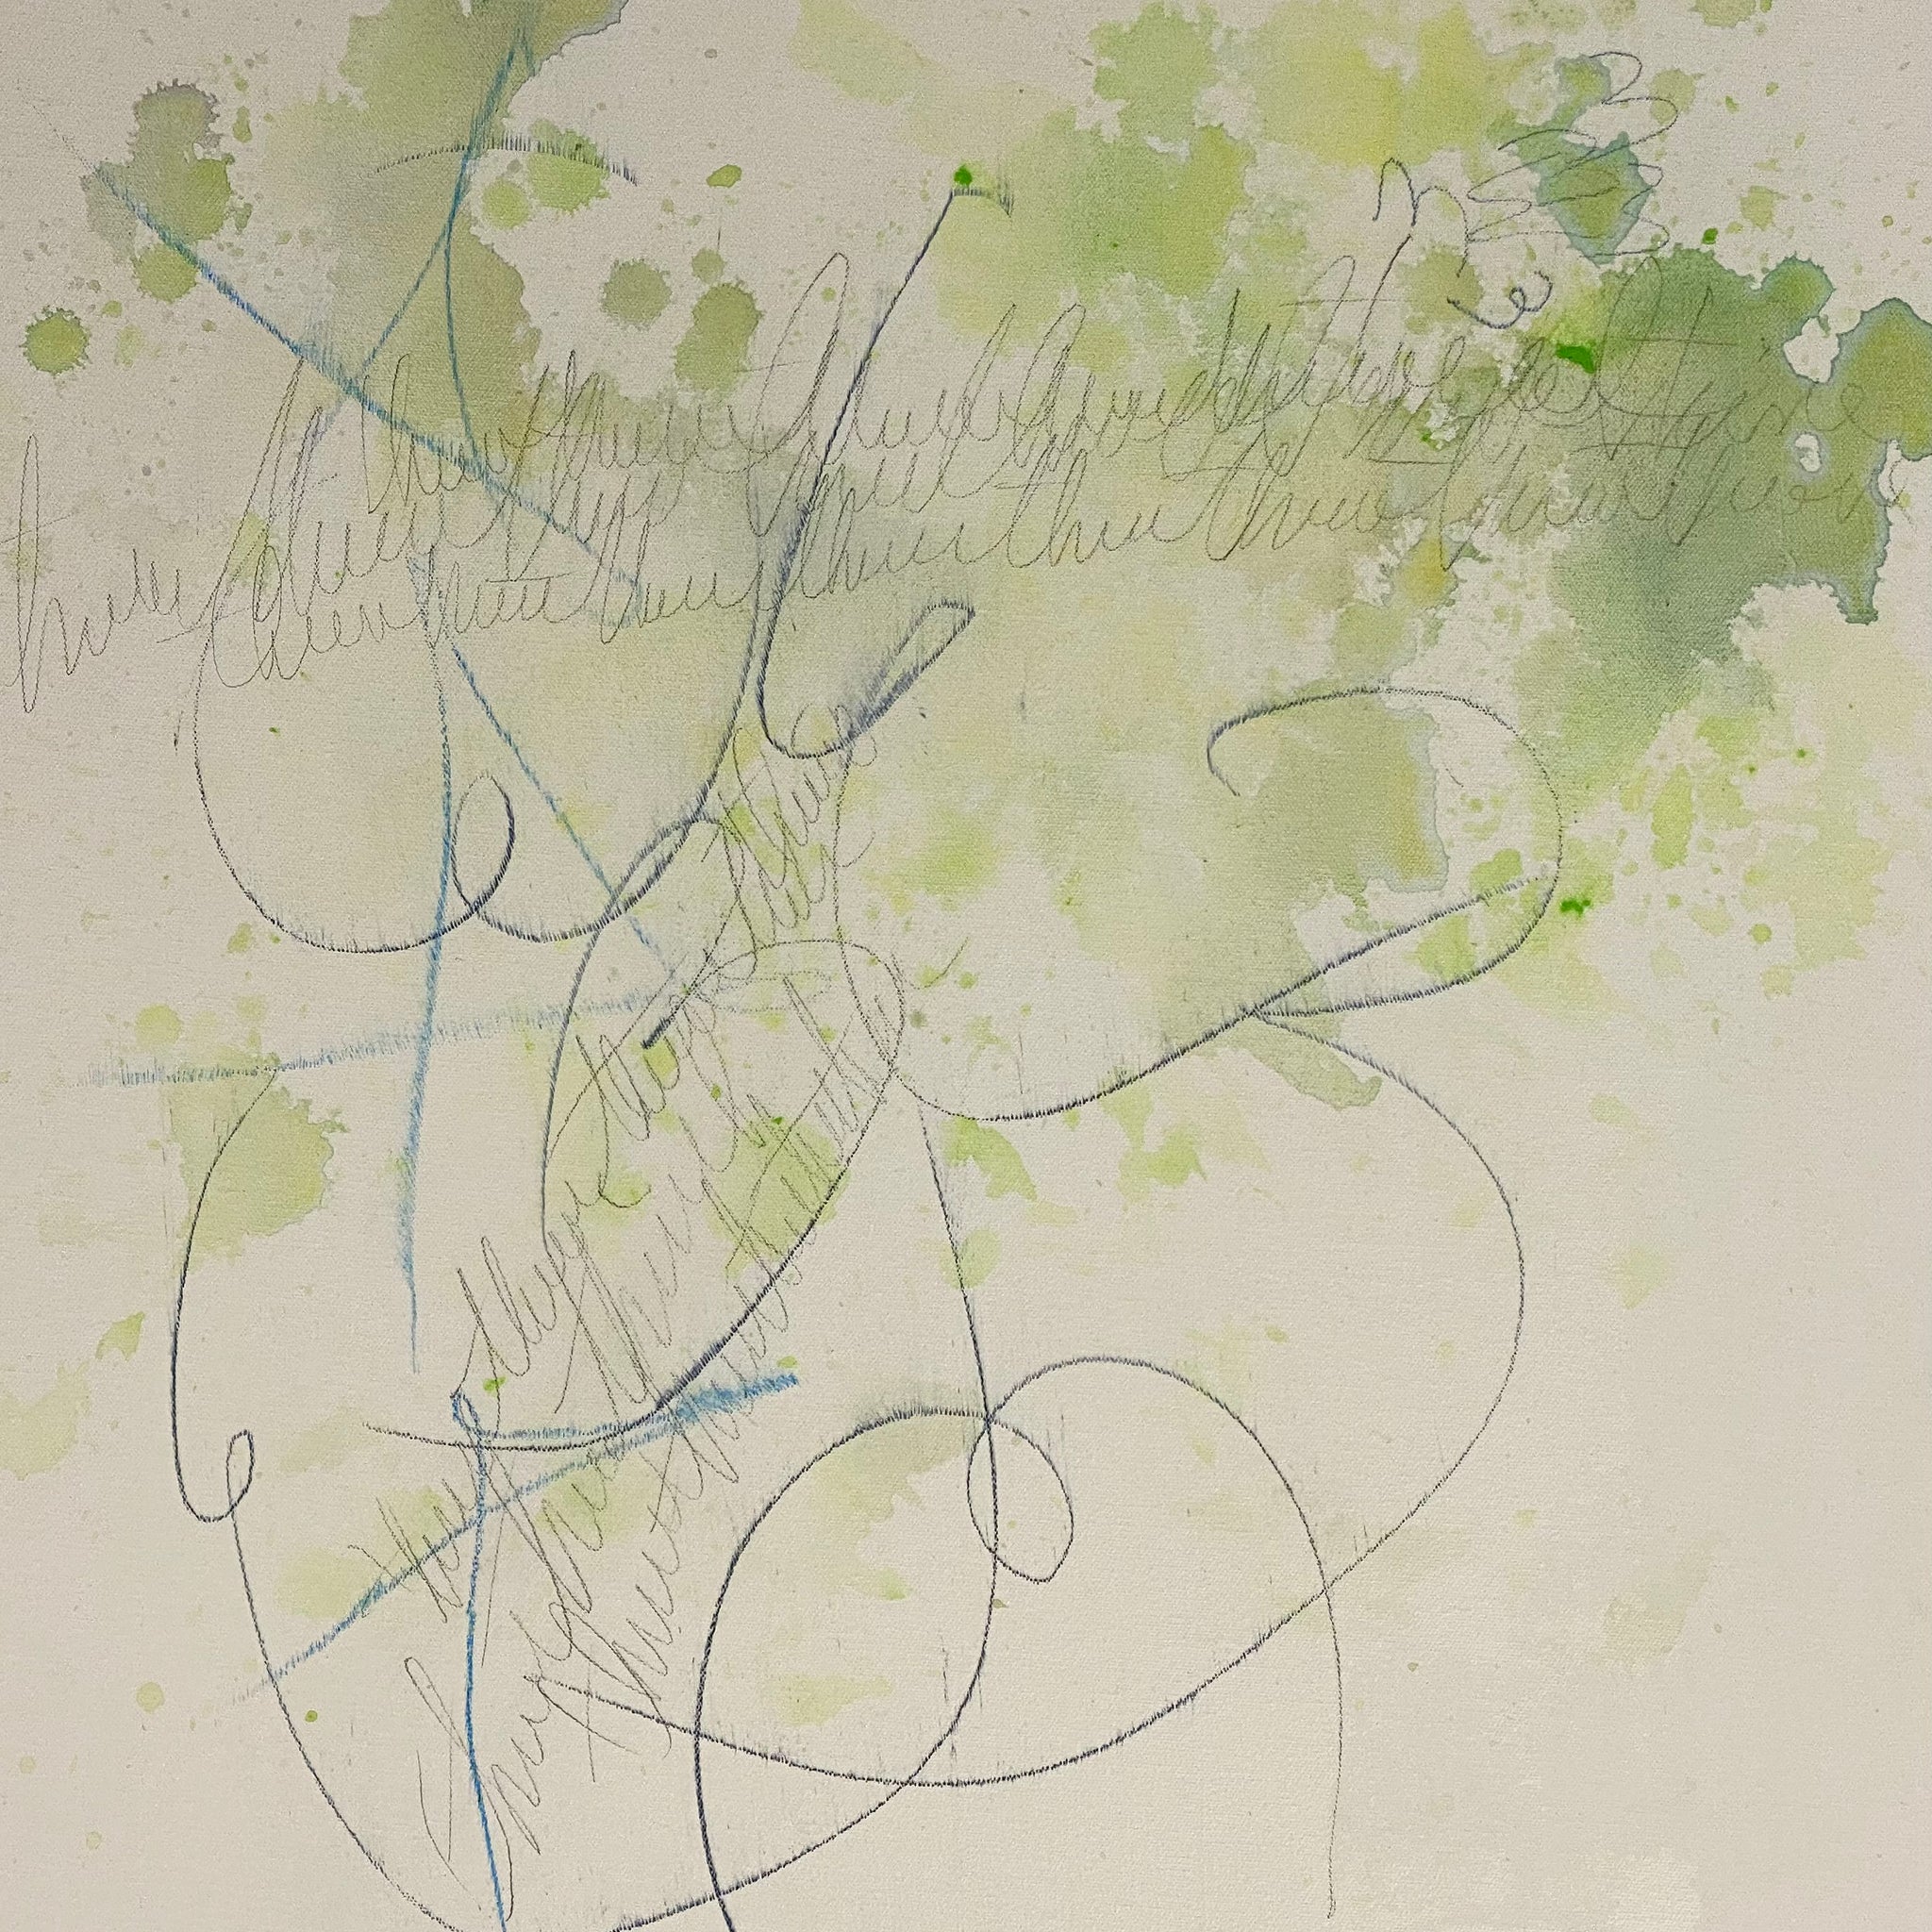 Juanita Bellavance, Variation 24: Cadenza/improv 6, From Variations on a theme portfolio, Acrylic on canvas, 24 x 24 inches